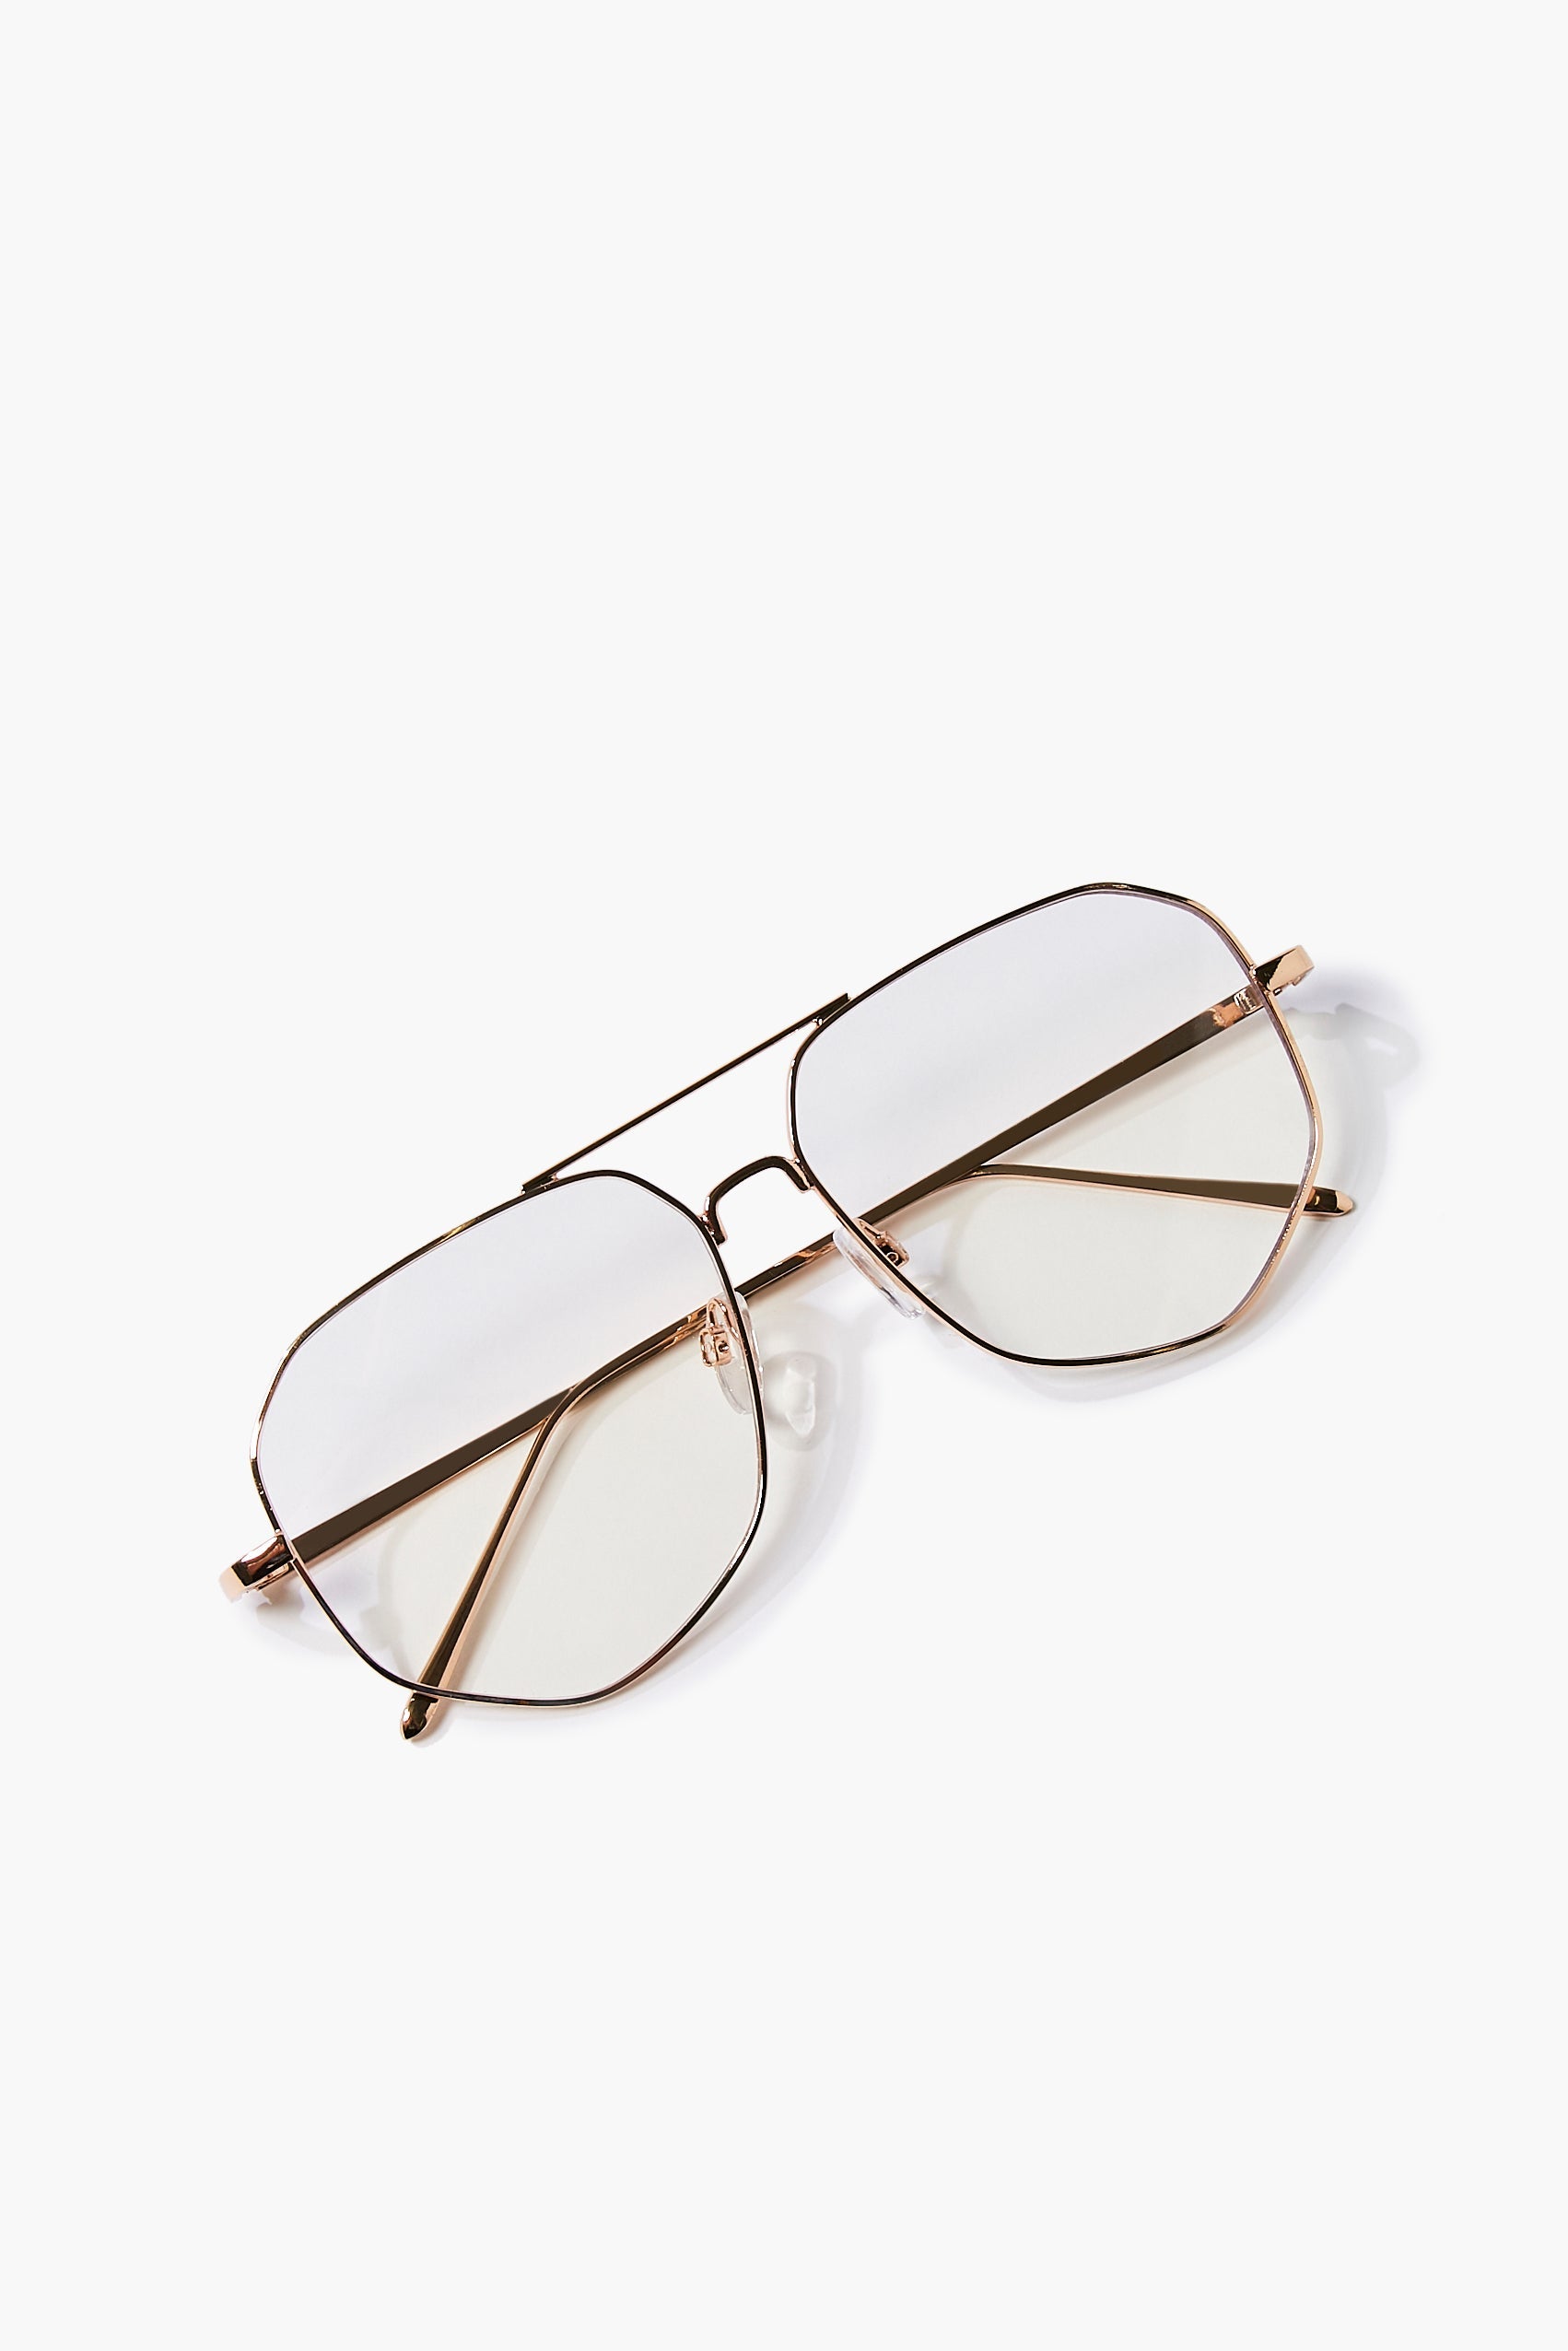 Goldclear Wire-Frame Reader Glasses 4